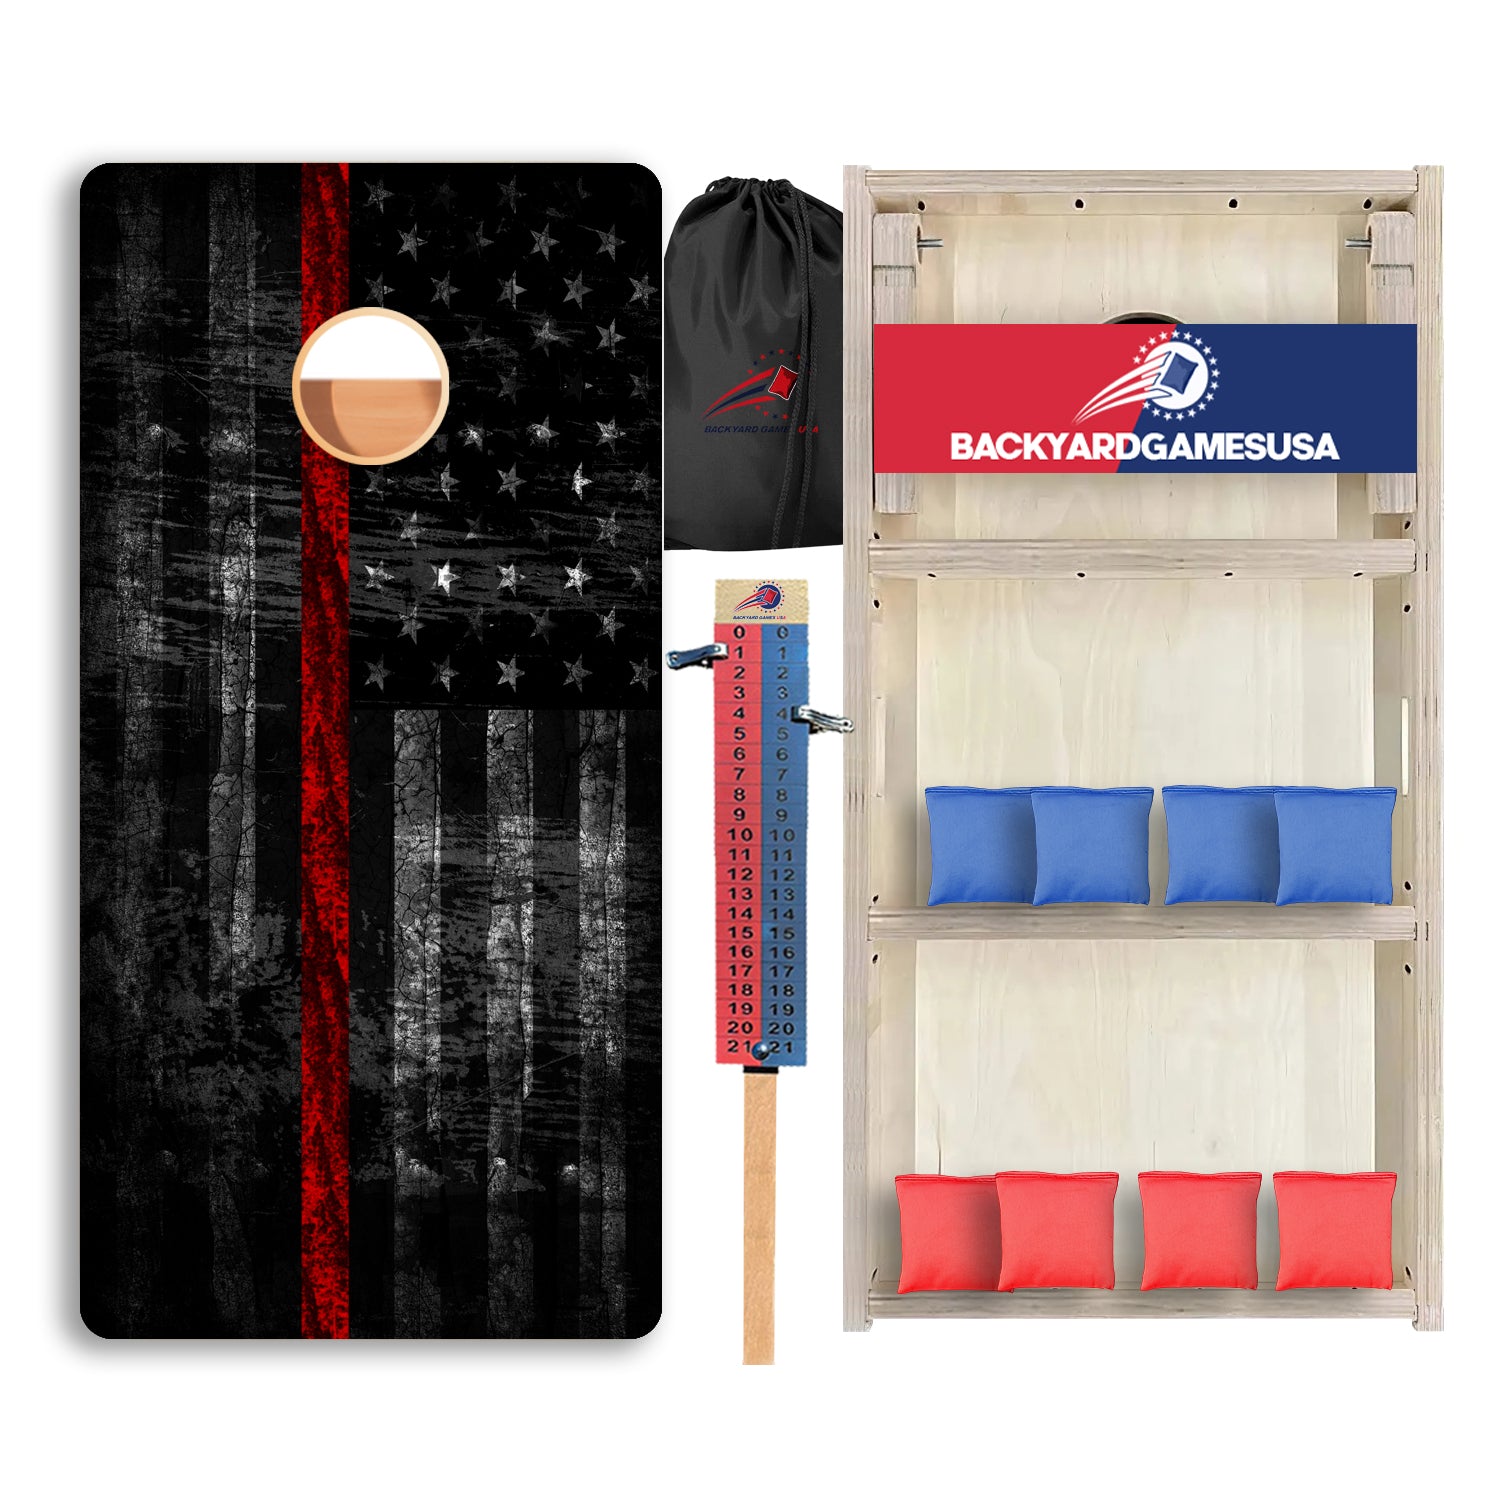 Dark Red Line Professional Cornhole Boards